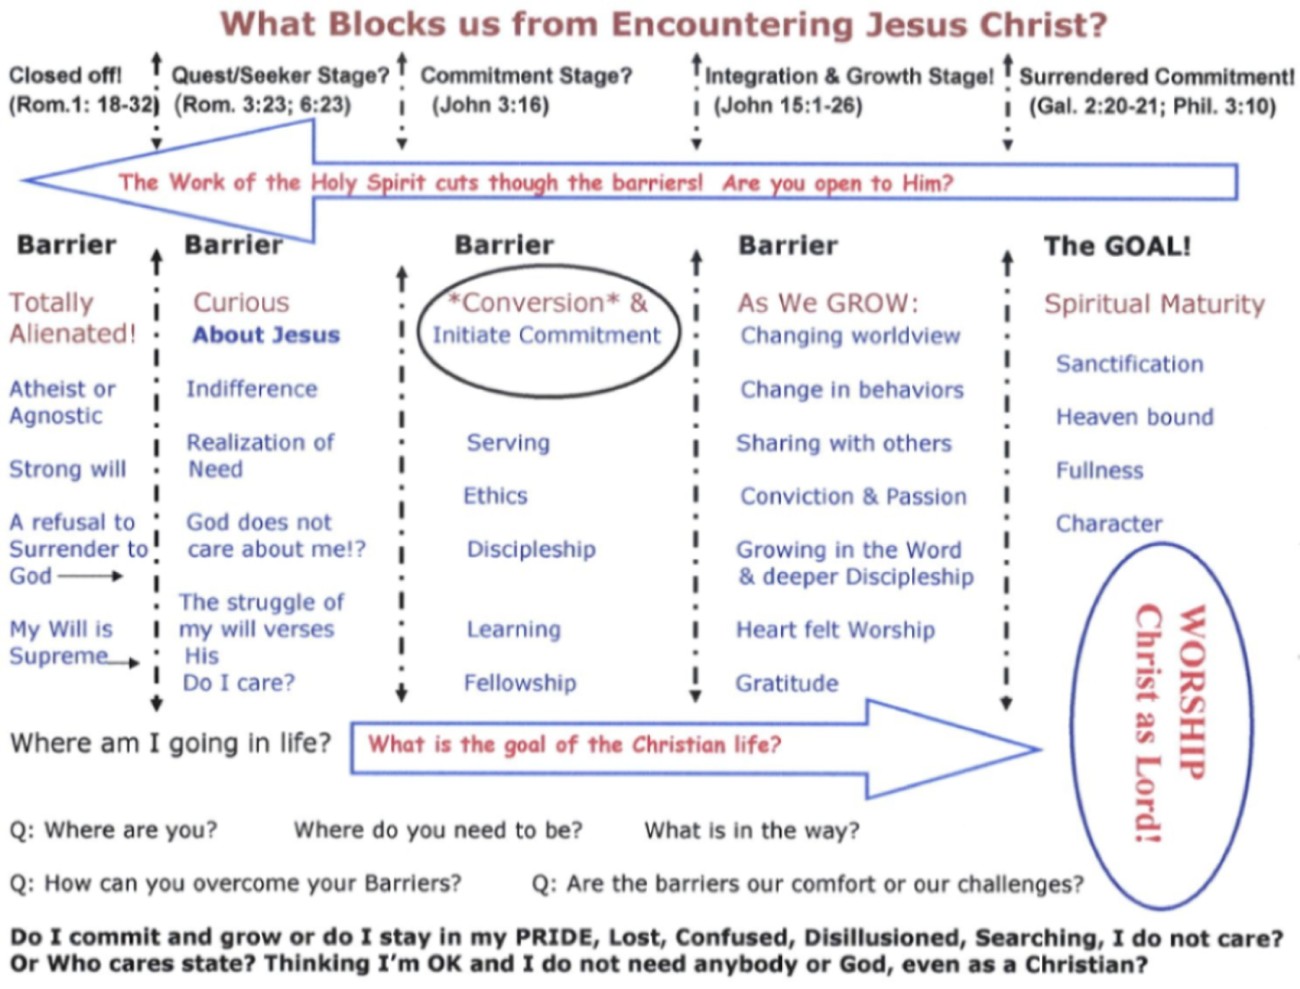 Discipleship Chart